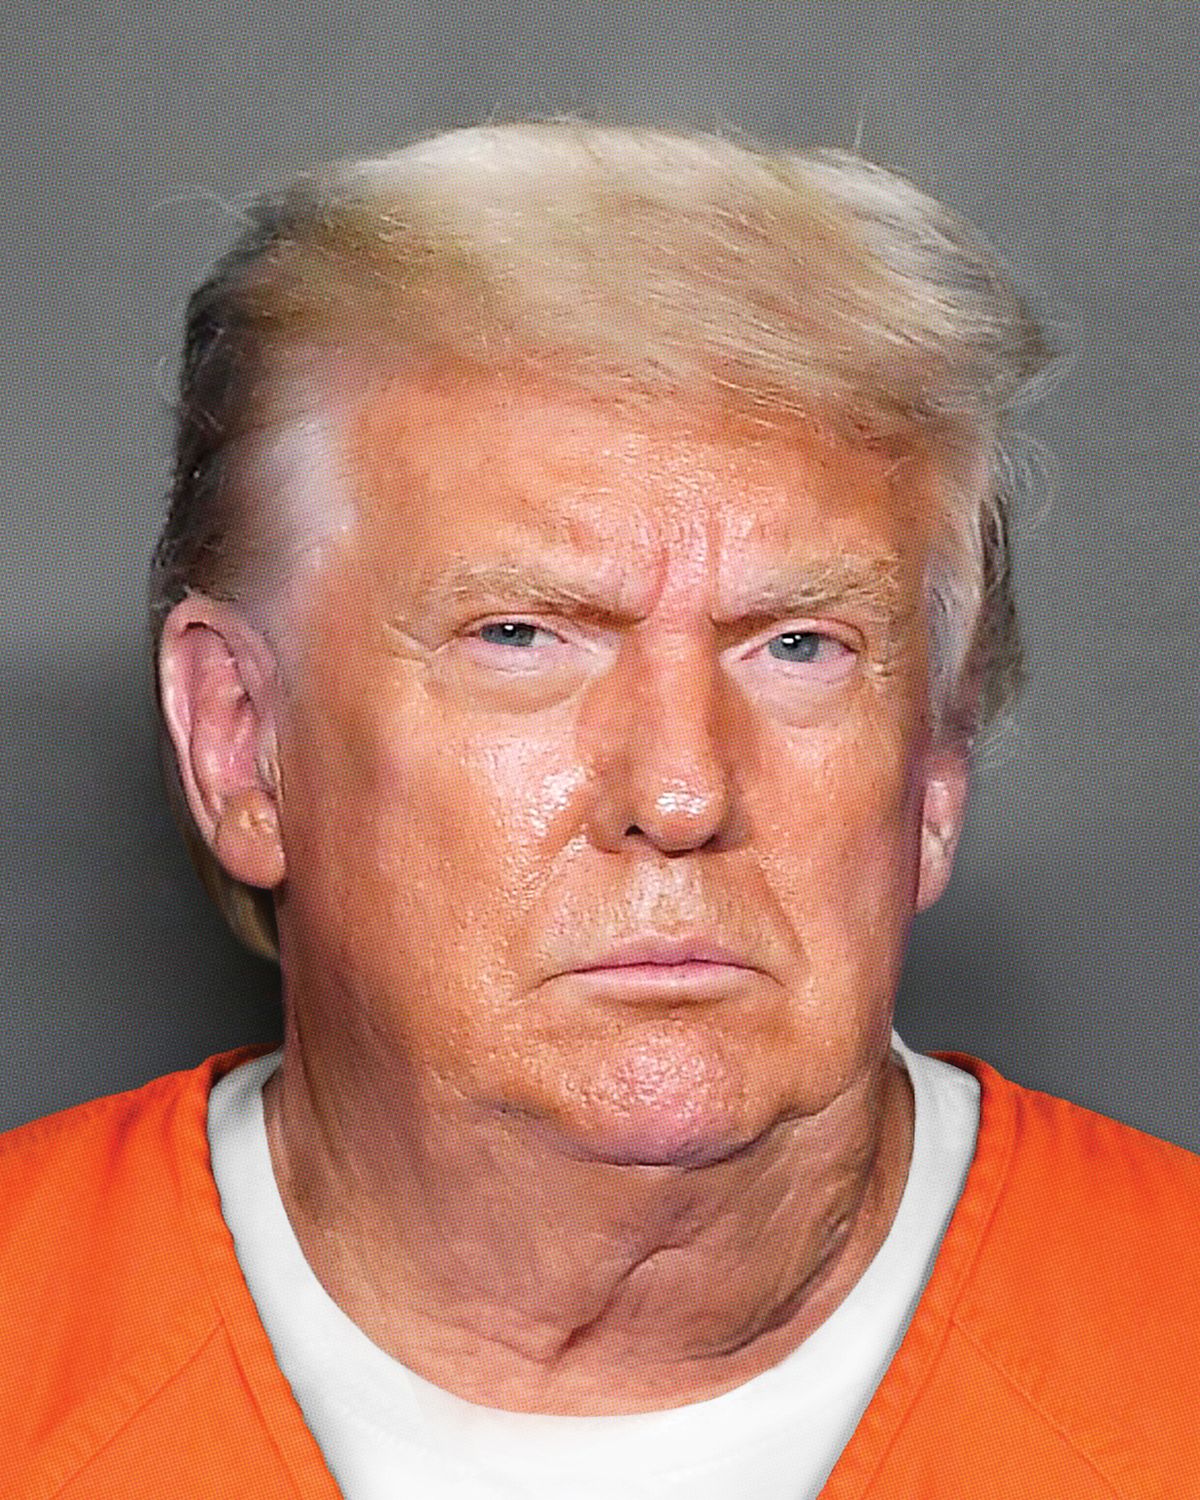 Image result for trump orange suit jail